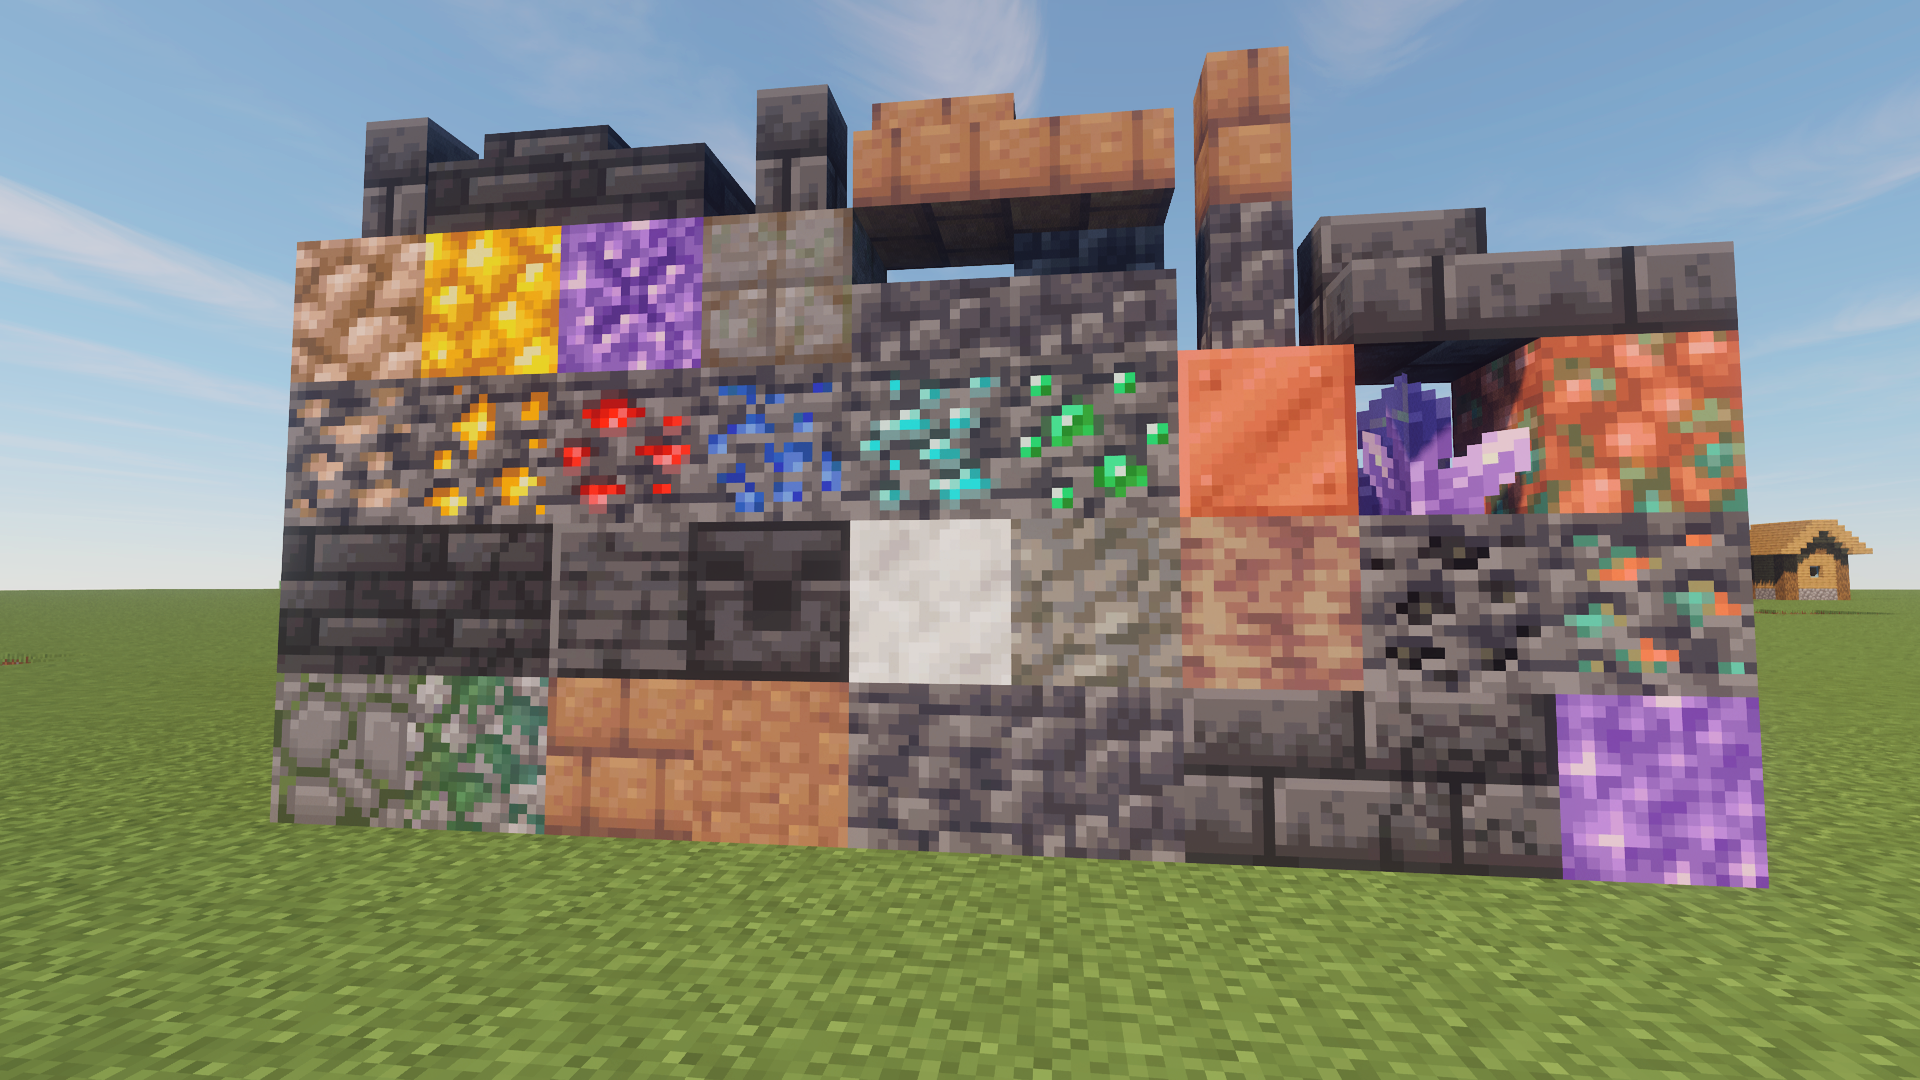 Rock type building blocks